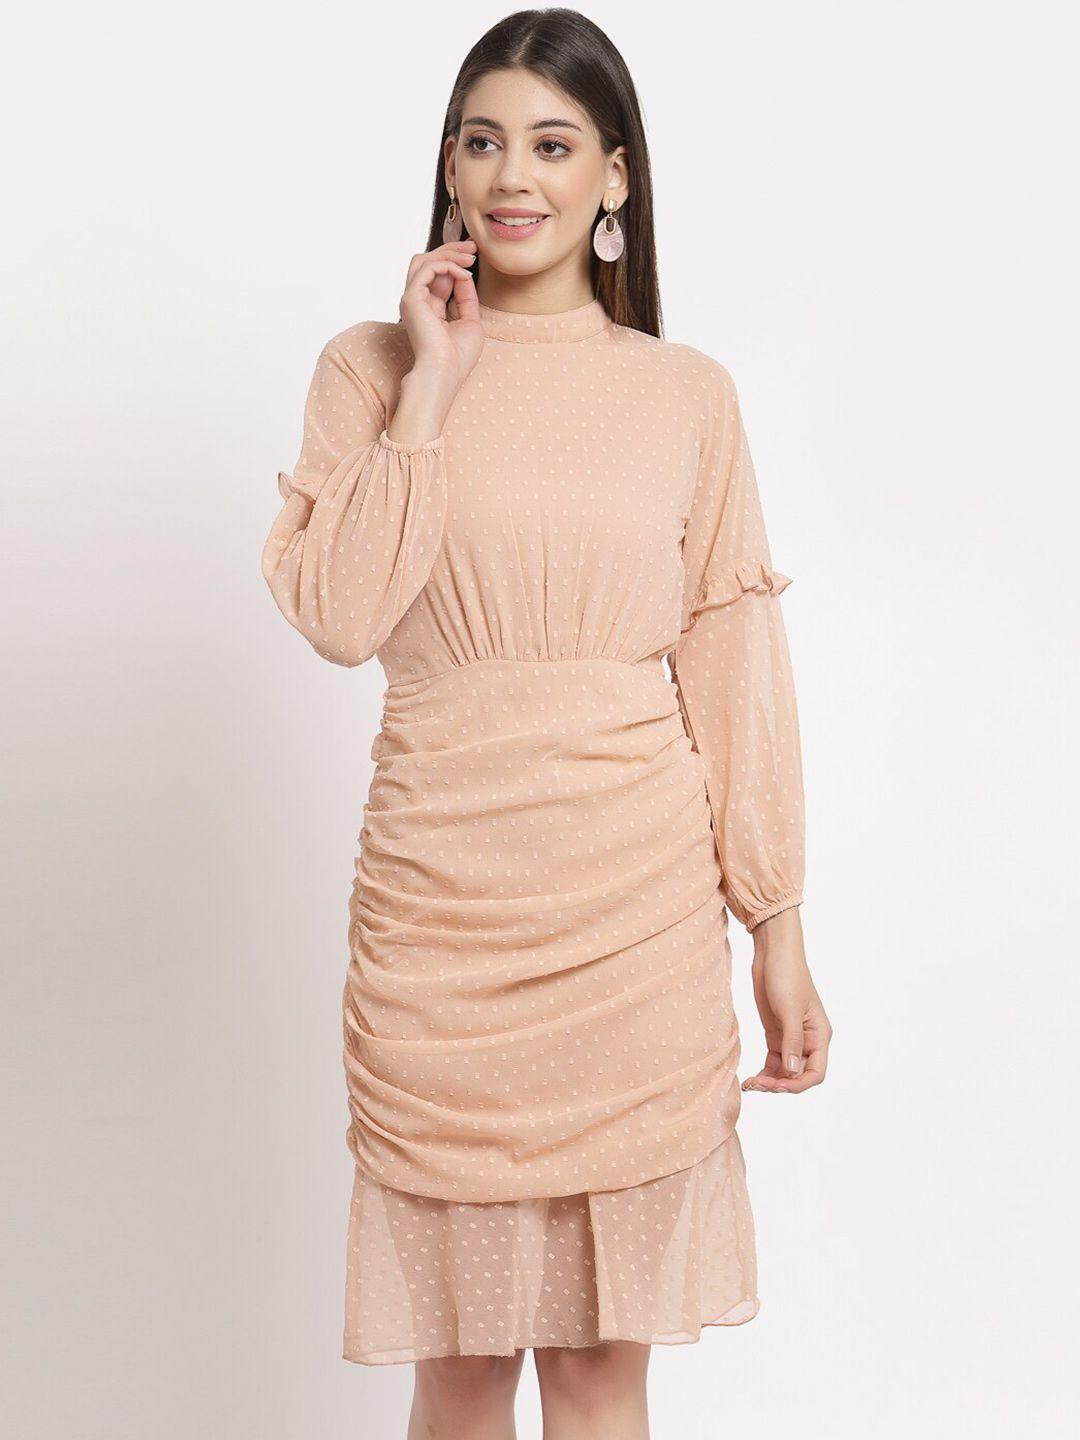 aayu women peach-coloured georgette sheath midi dress